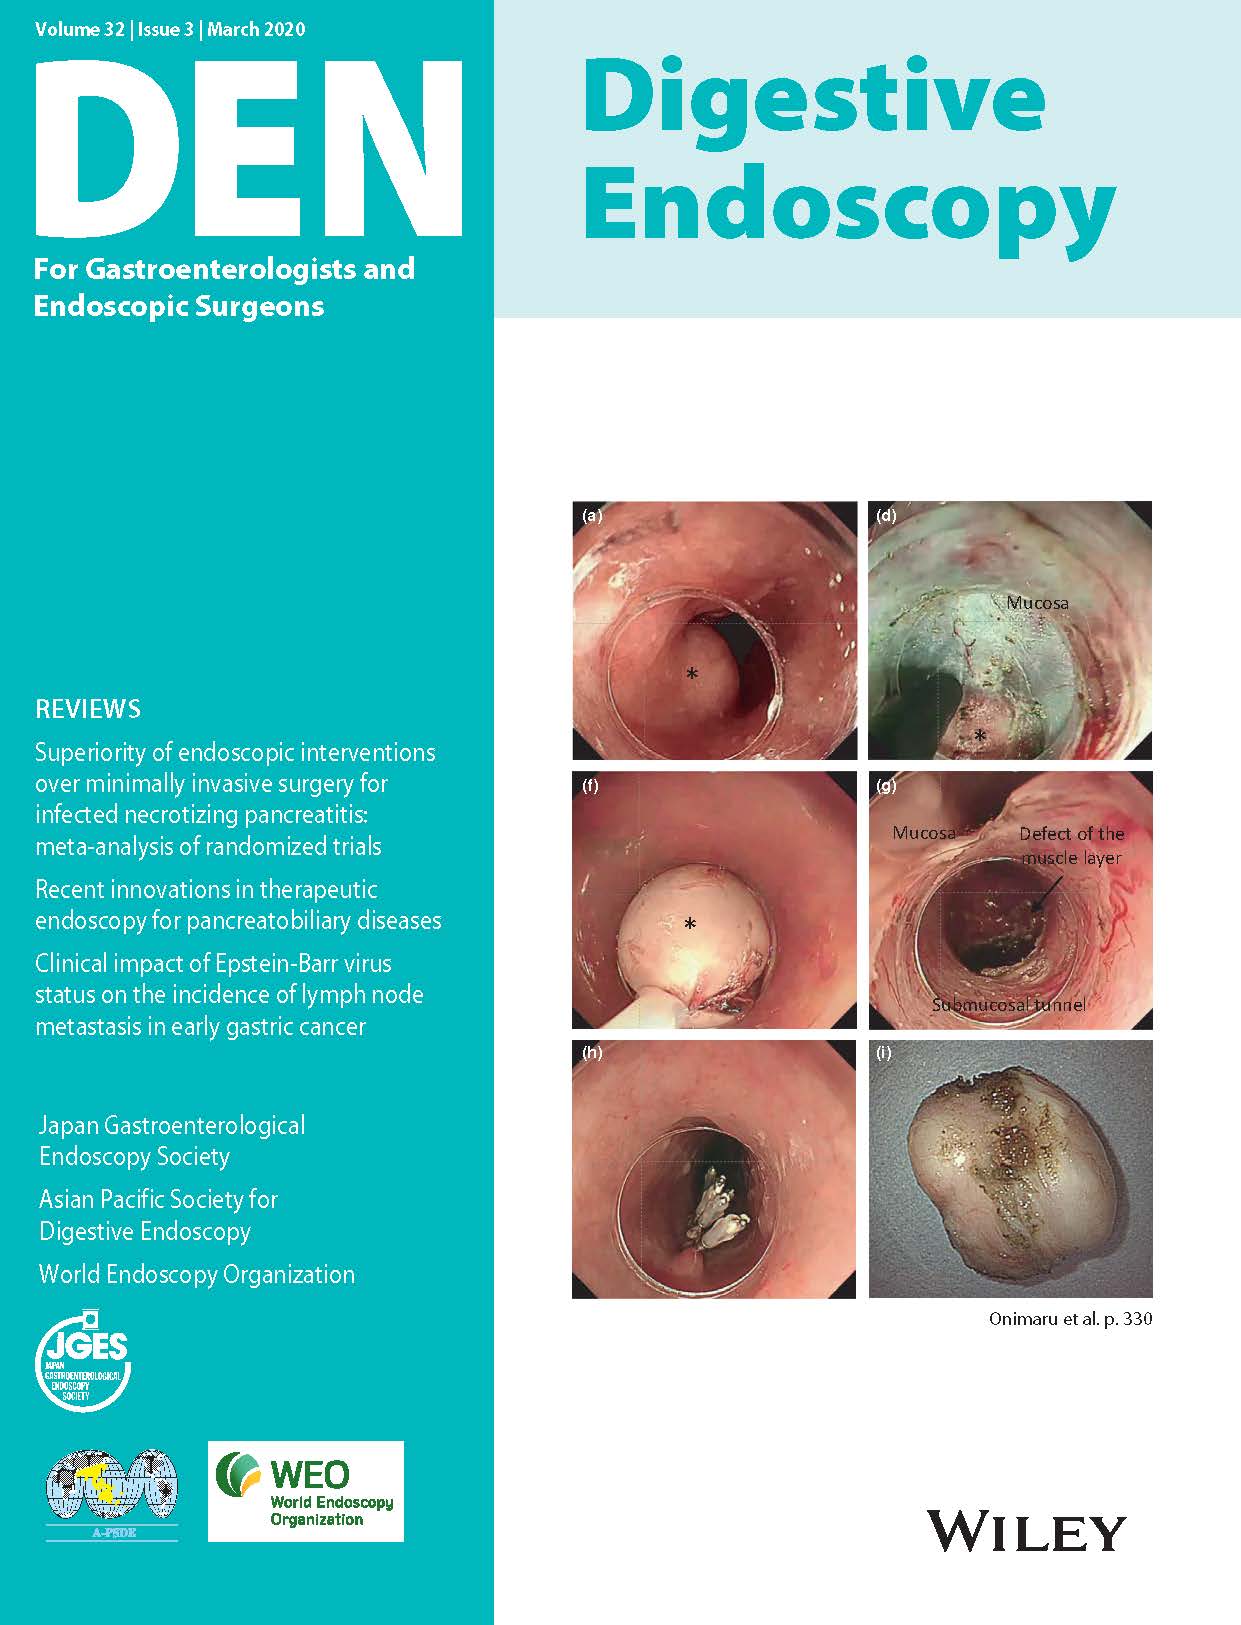 Digestive Endoscopy Vol32-3